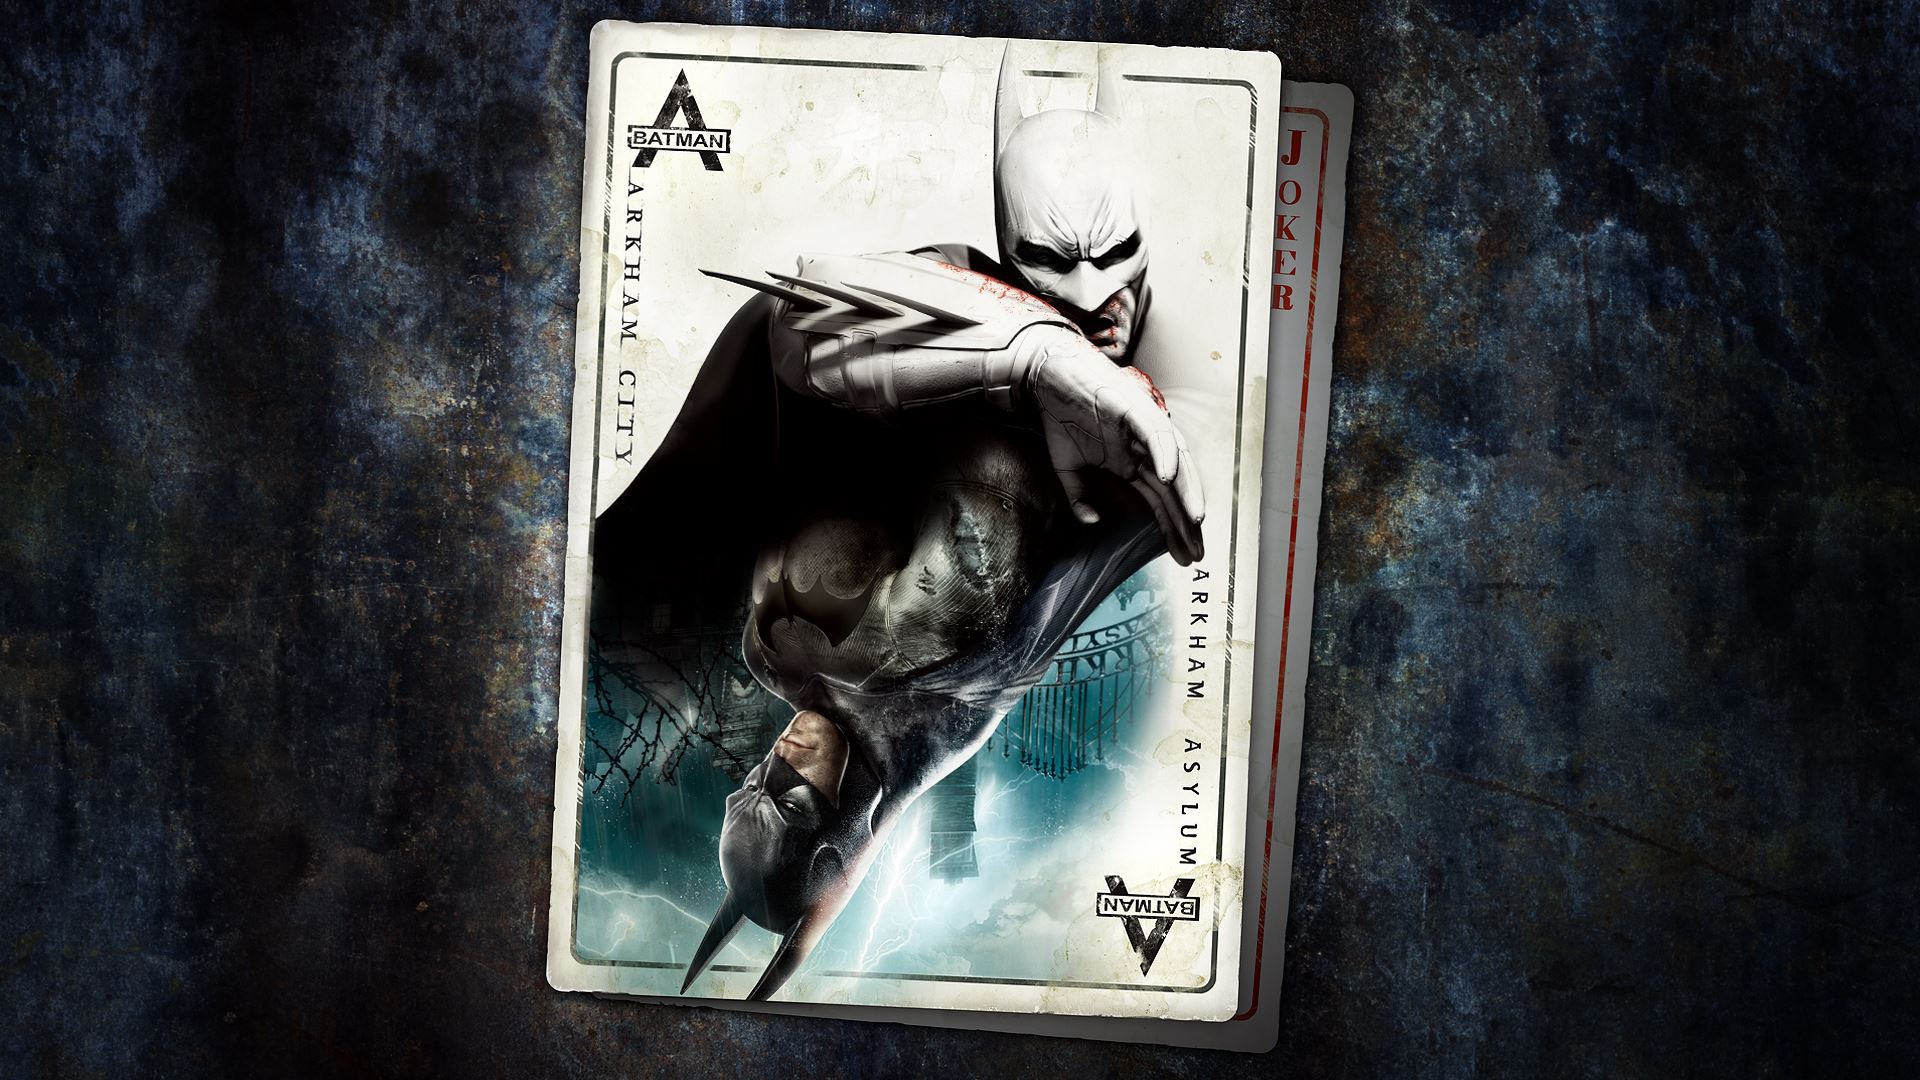 Batman Return to Arkham cover art